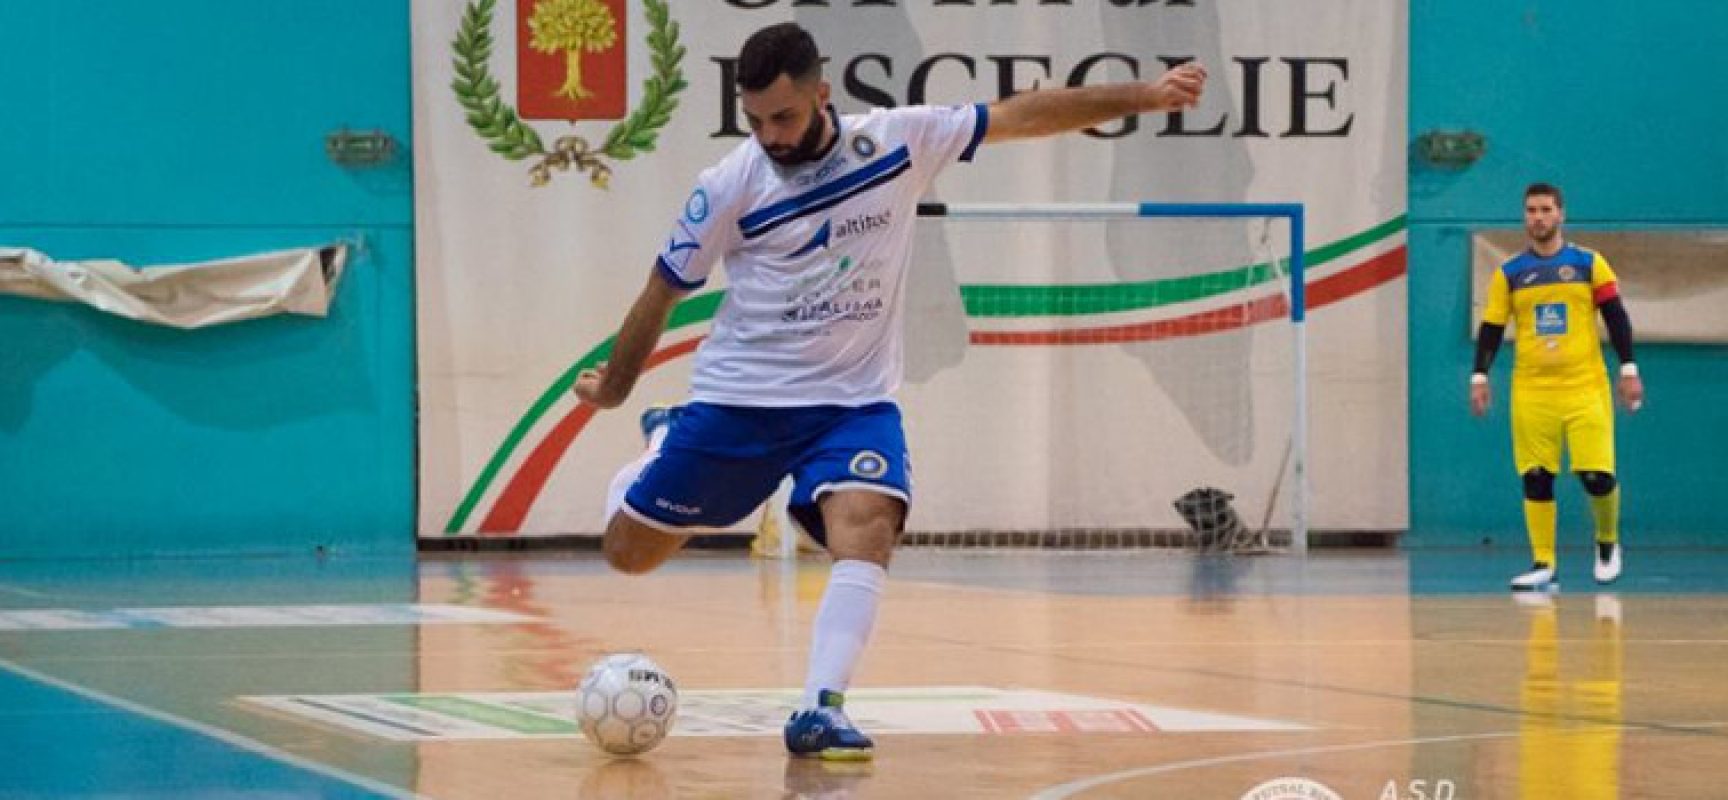 Futsal Bisceglie, rinnova Giacomo Ferrucci